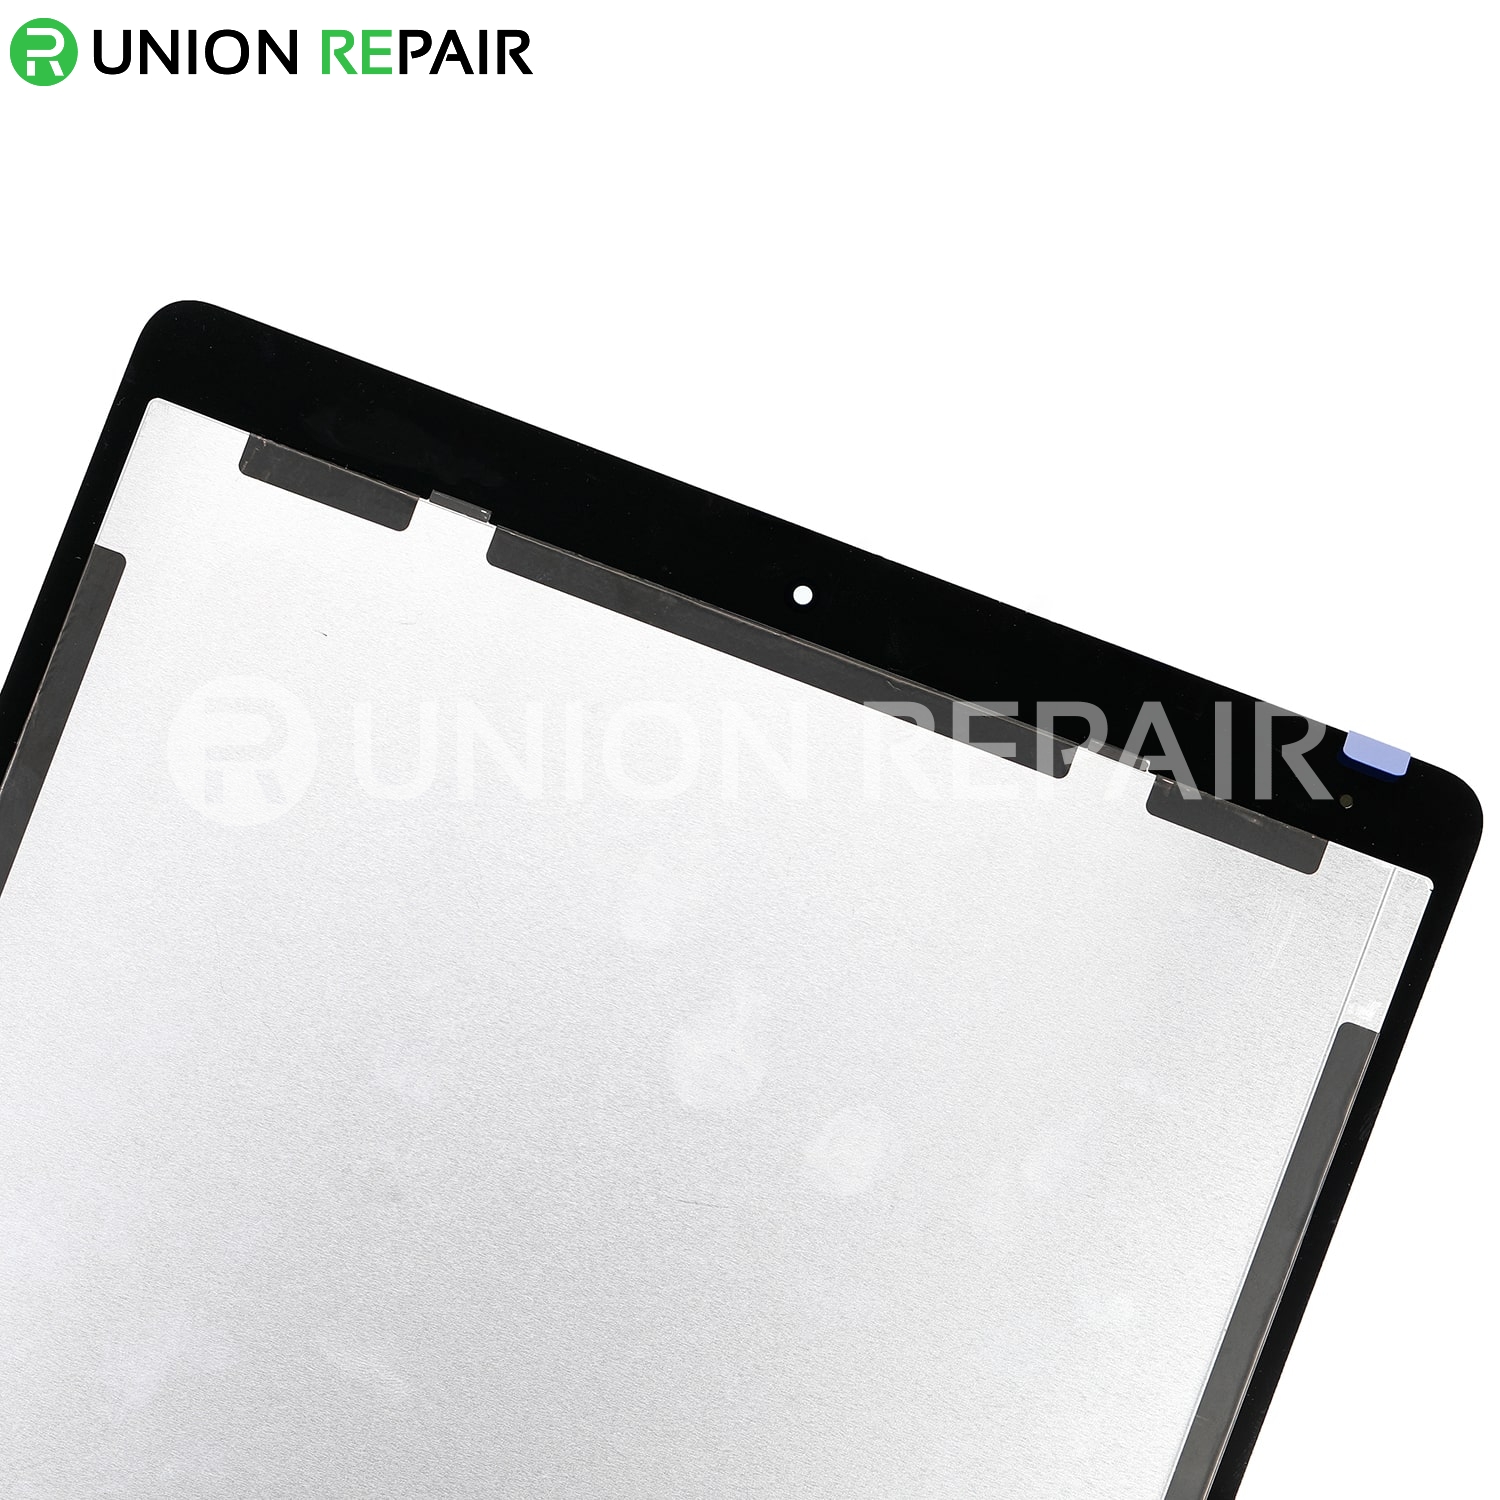 iPad 9 LCD + Screen & Digitizer (Repair Included)